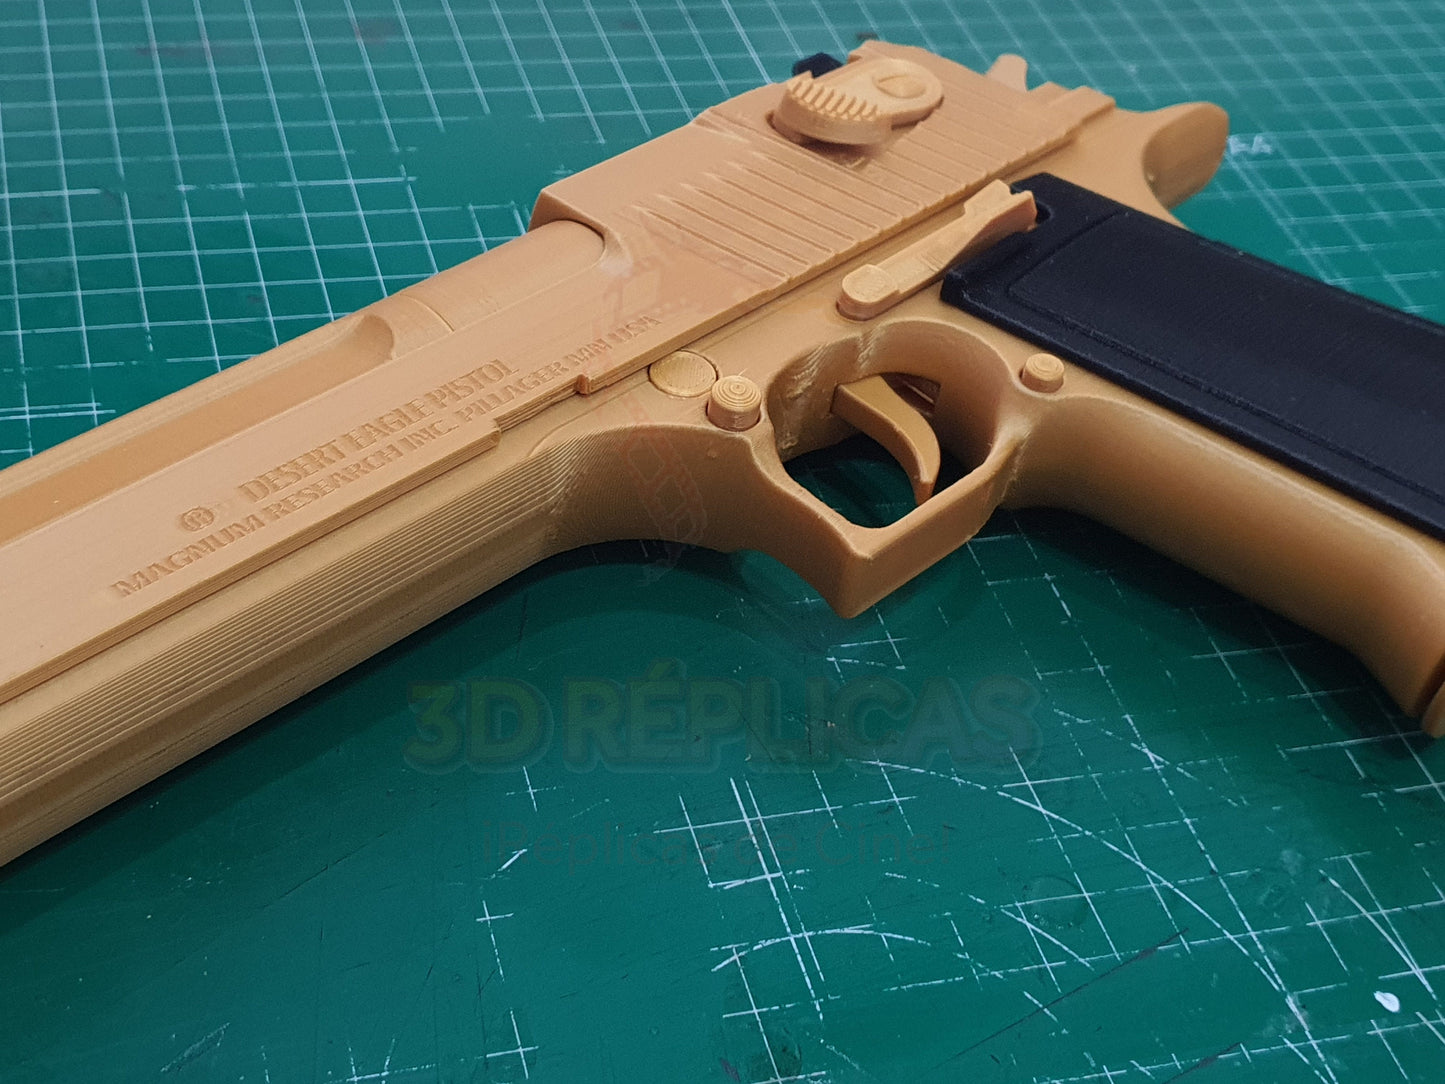 IMI Magnum Research Desert Eagle Pistol Cosplay Prop Replica Gun Charlie's Angels Crank Austin Powers Resident Evil